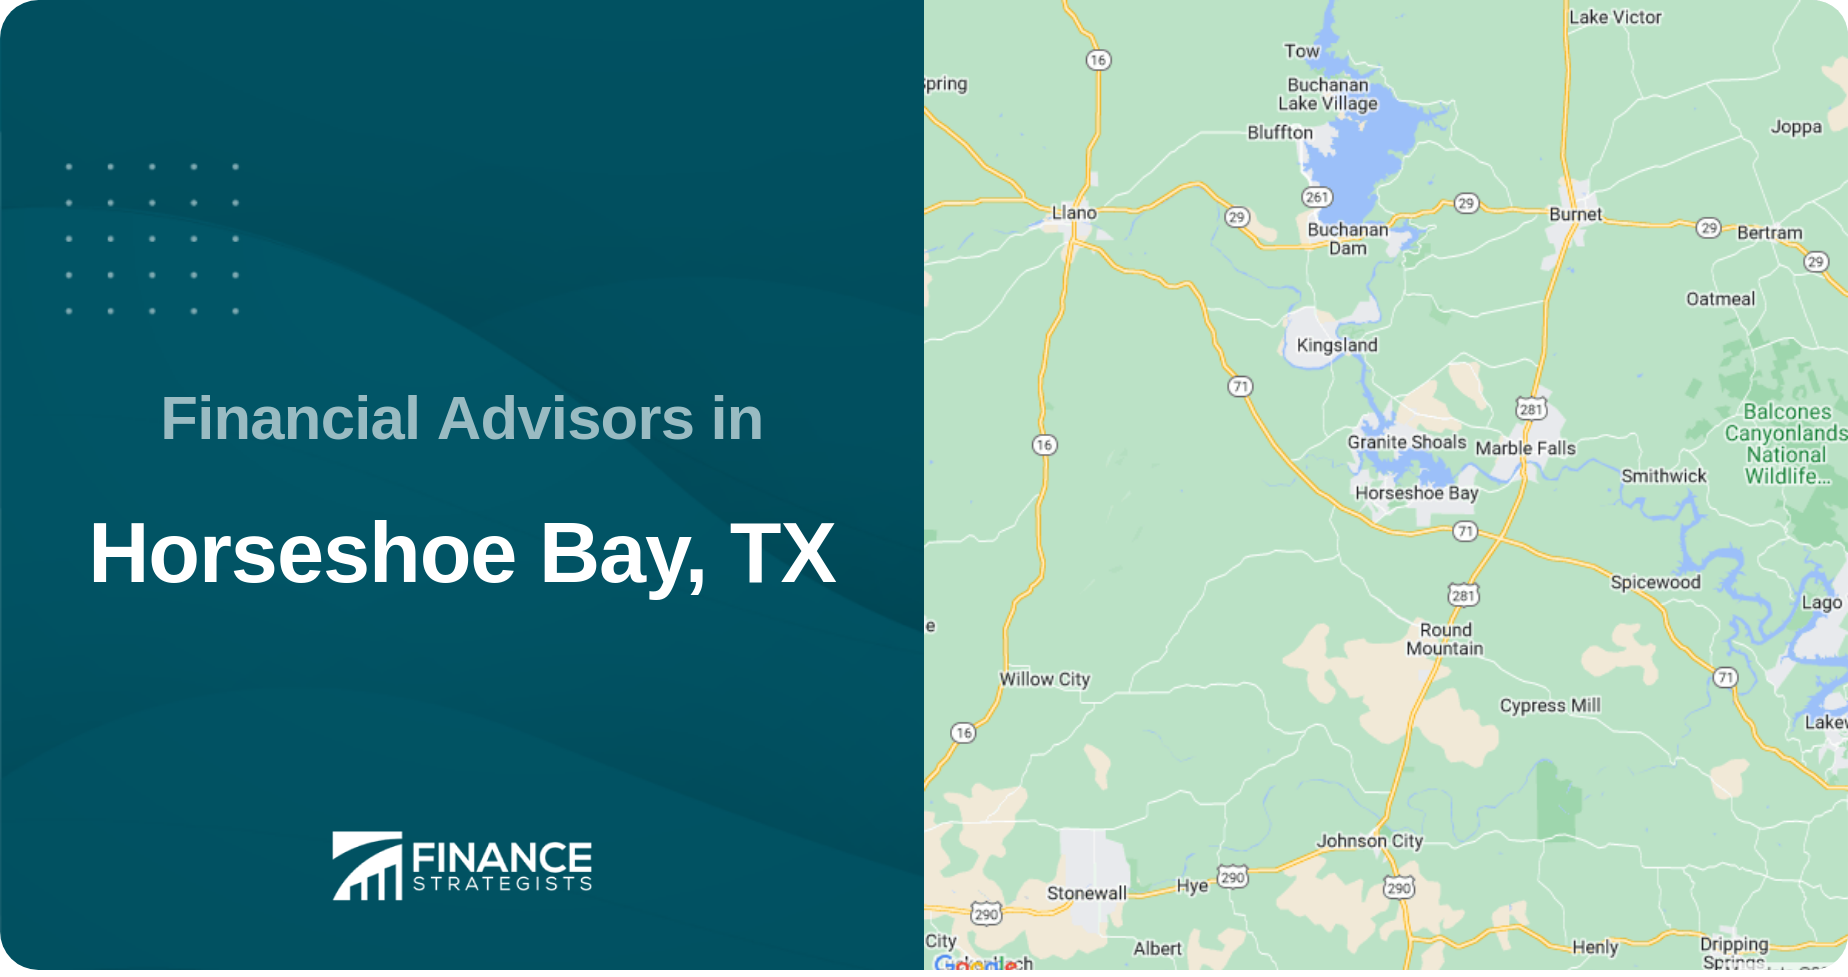 Financial Advisors in Horseshoe Bay, TX